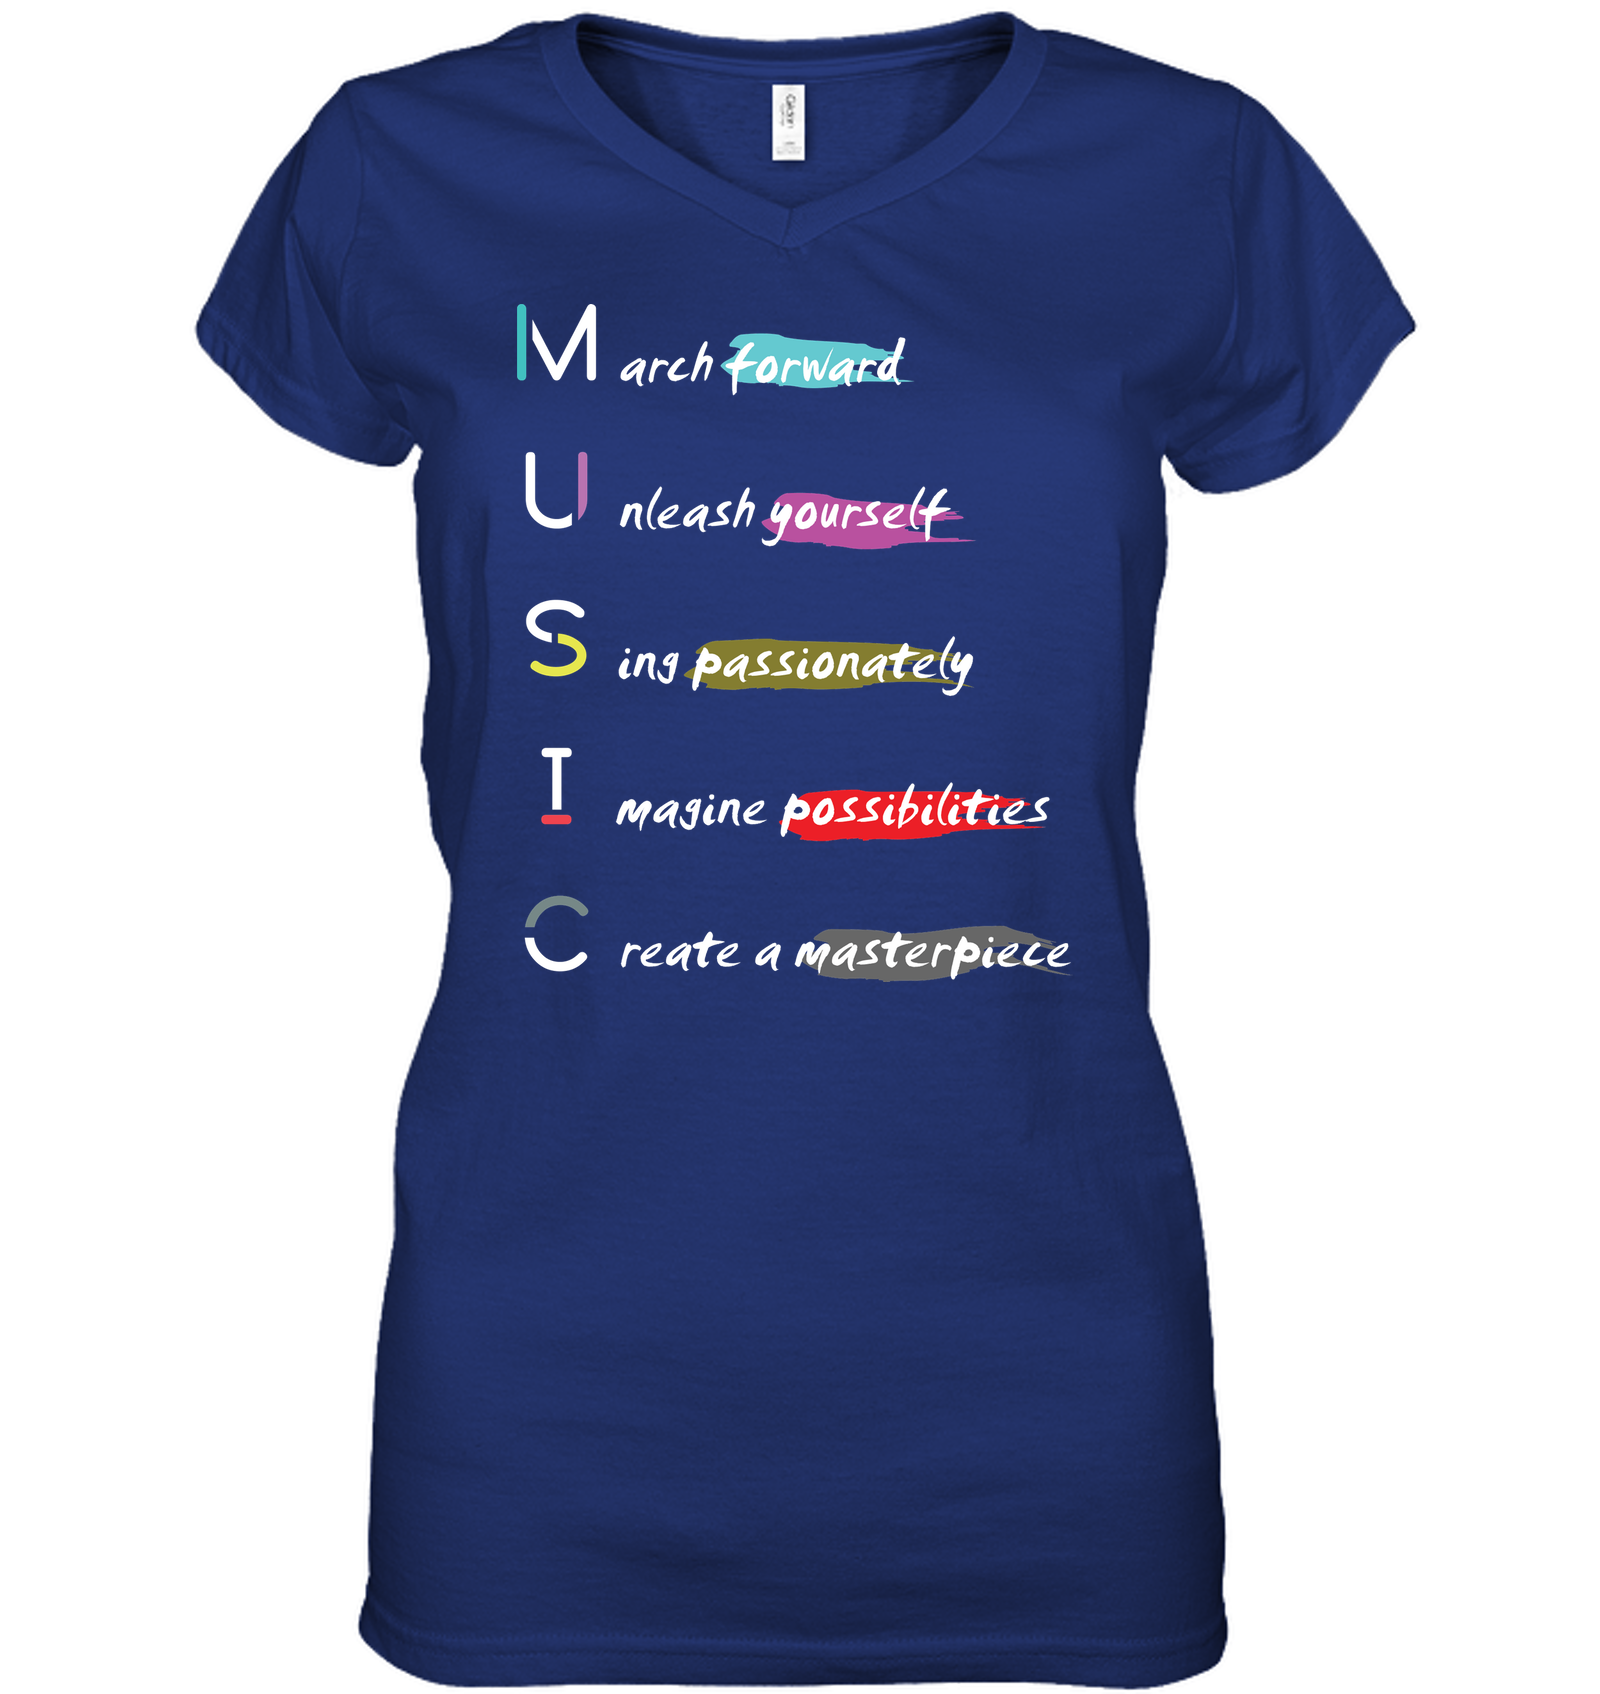 Unleash your Musical Masterpiece - Hanes Women's Nano-T® V-Neck T-Shirt